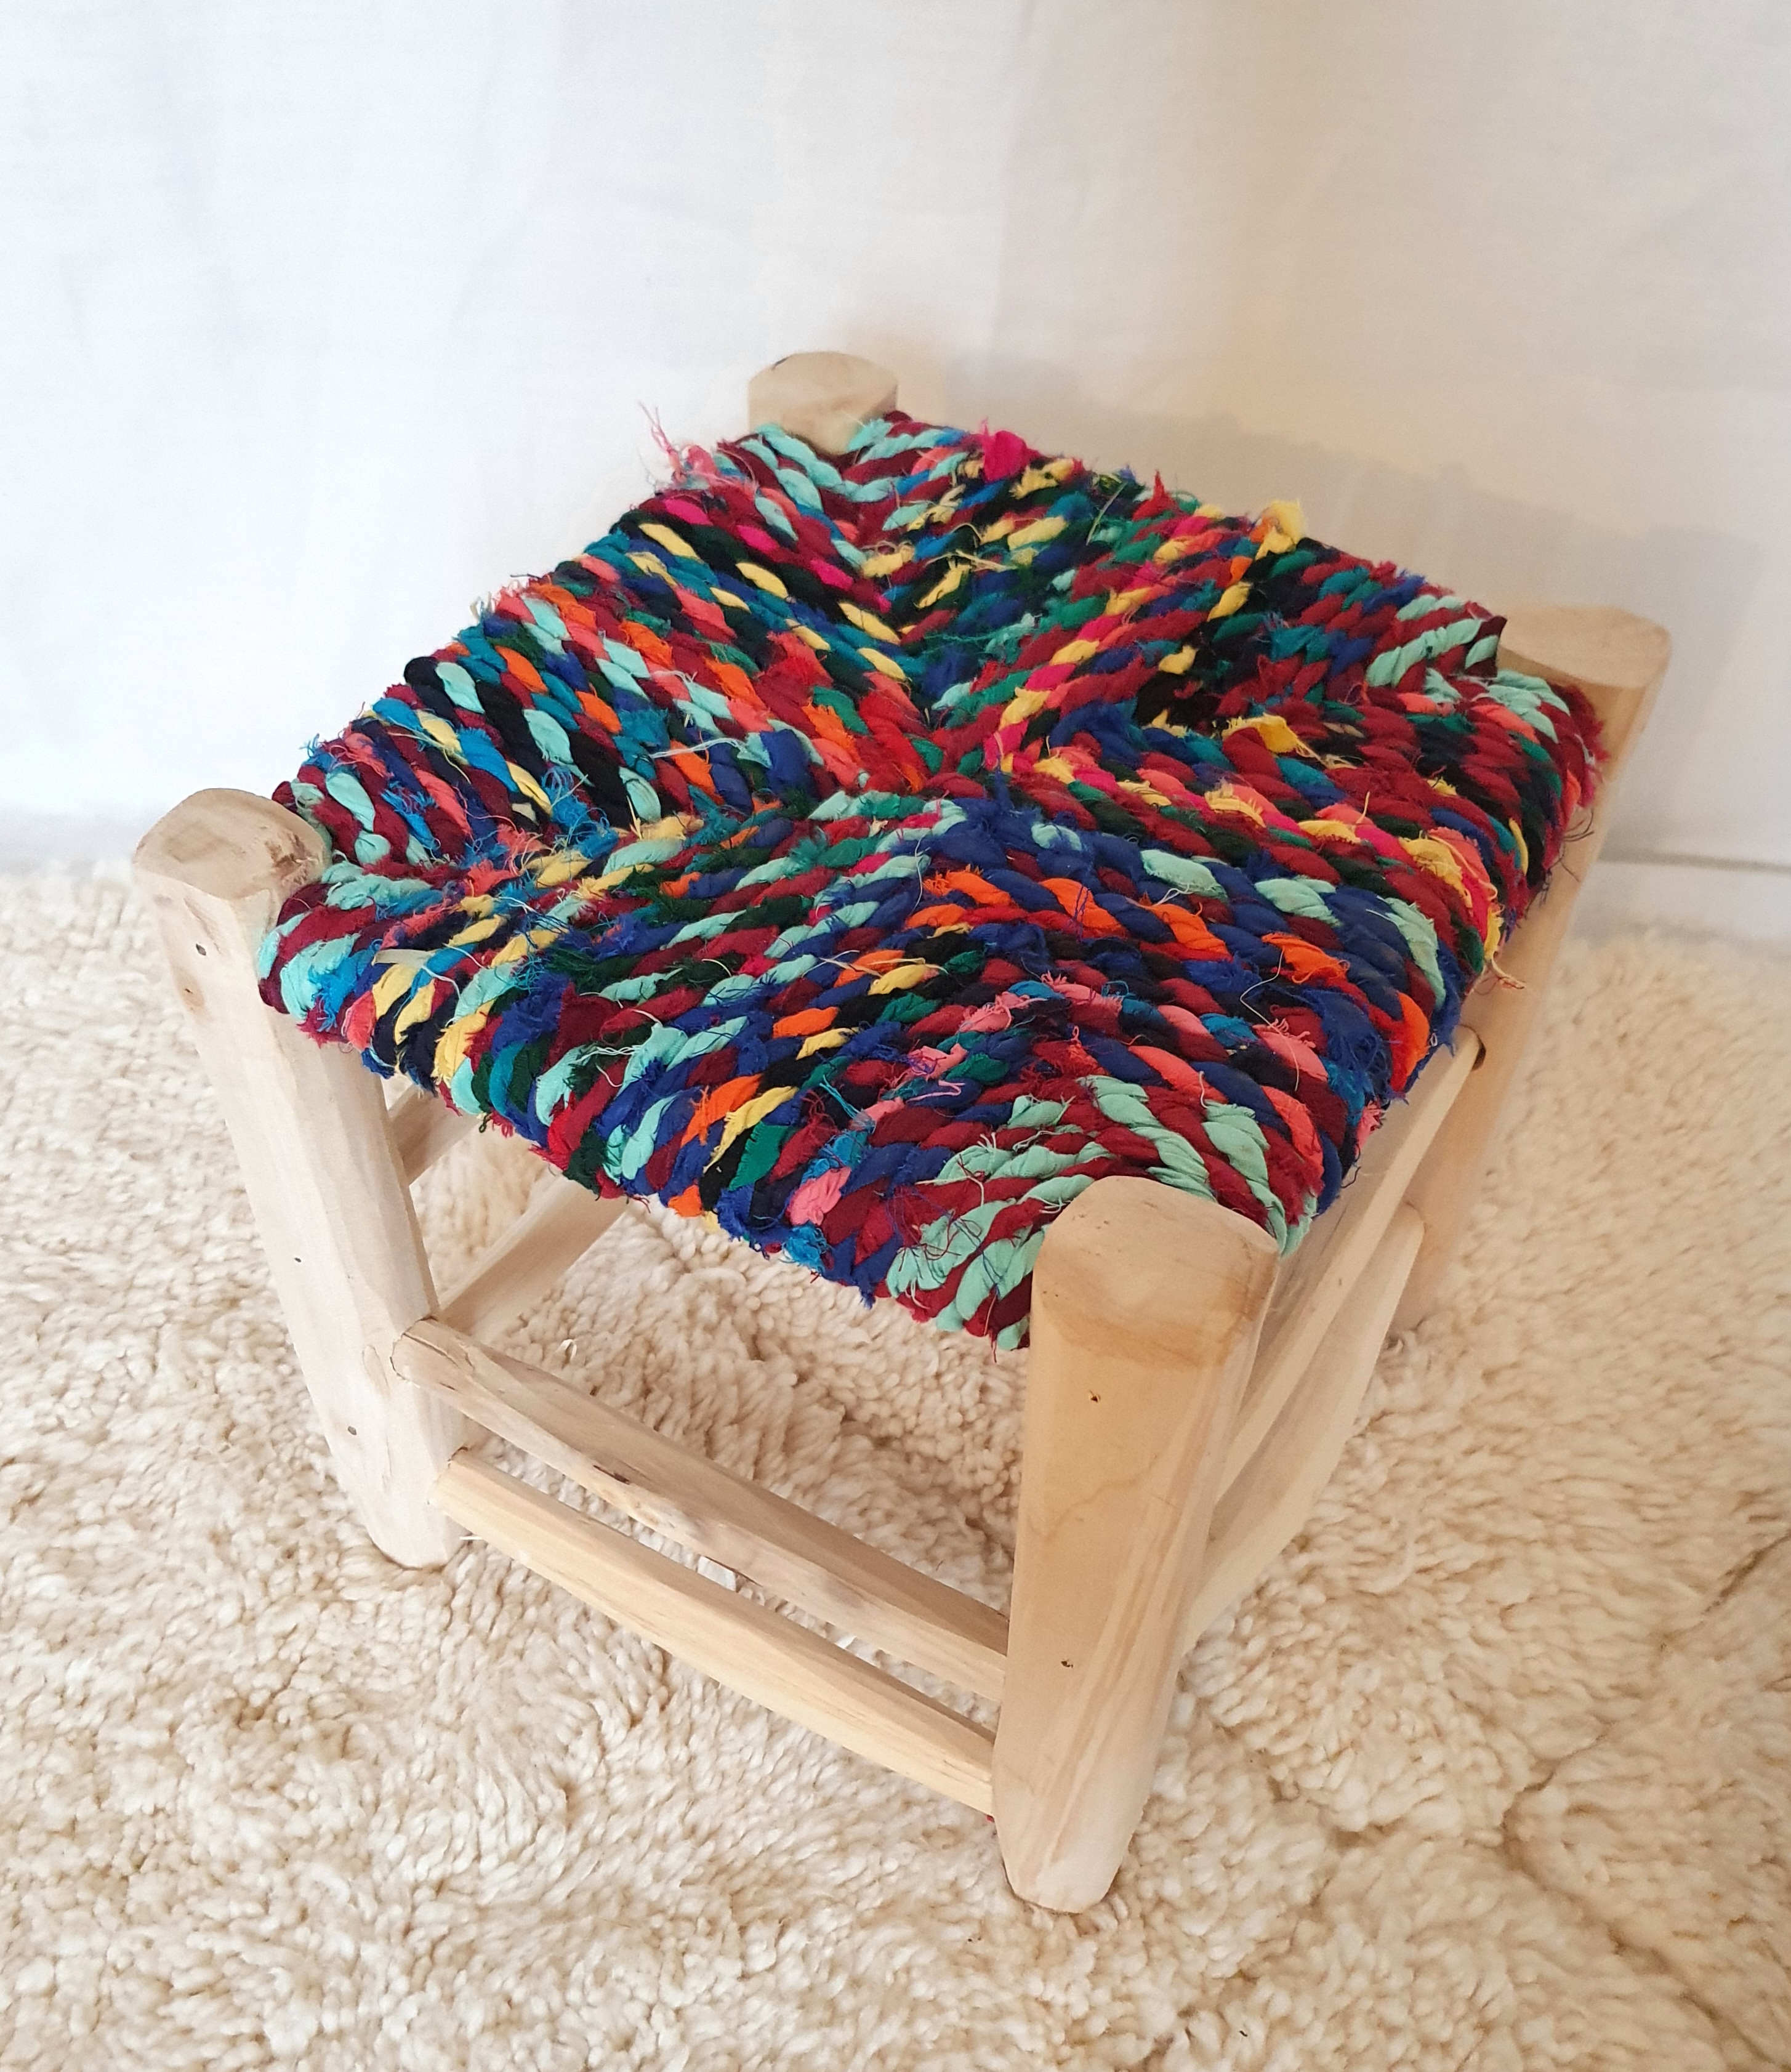 Tabouret traditionnel artisanal Marocain en bois et tissus multicolores